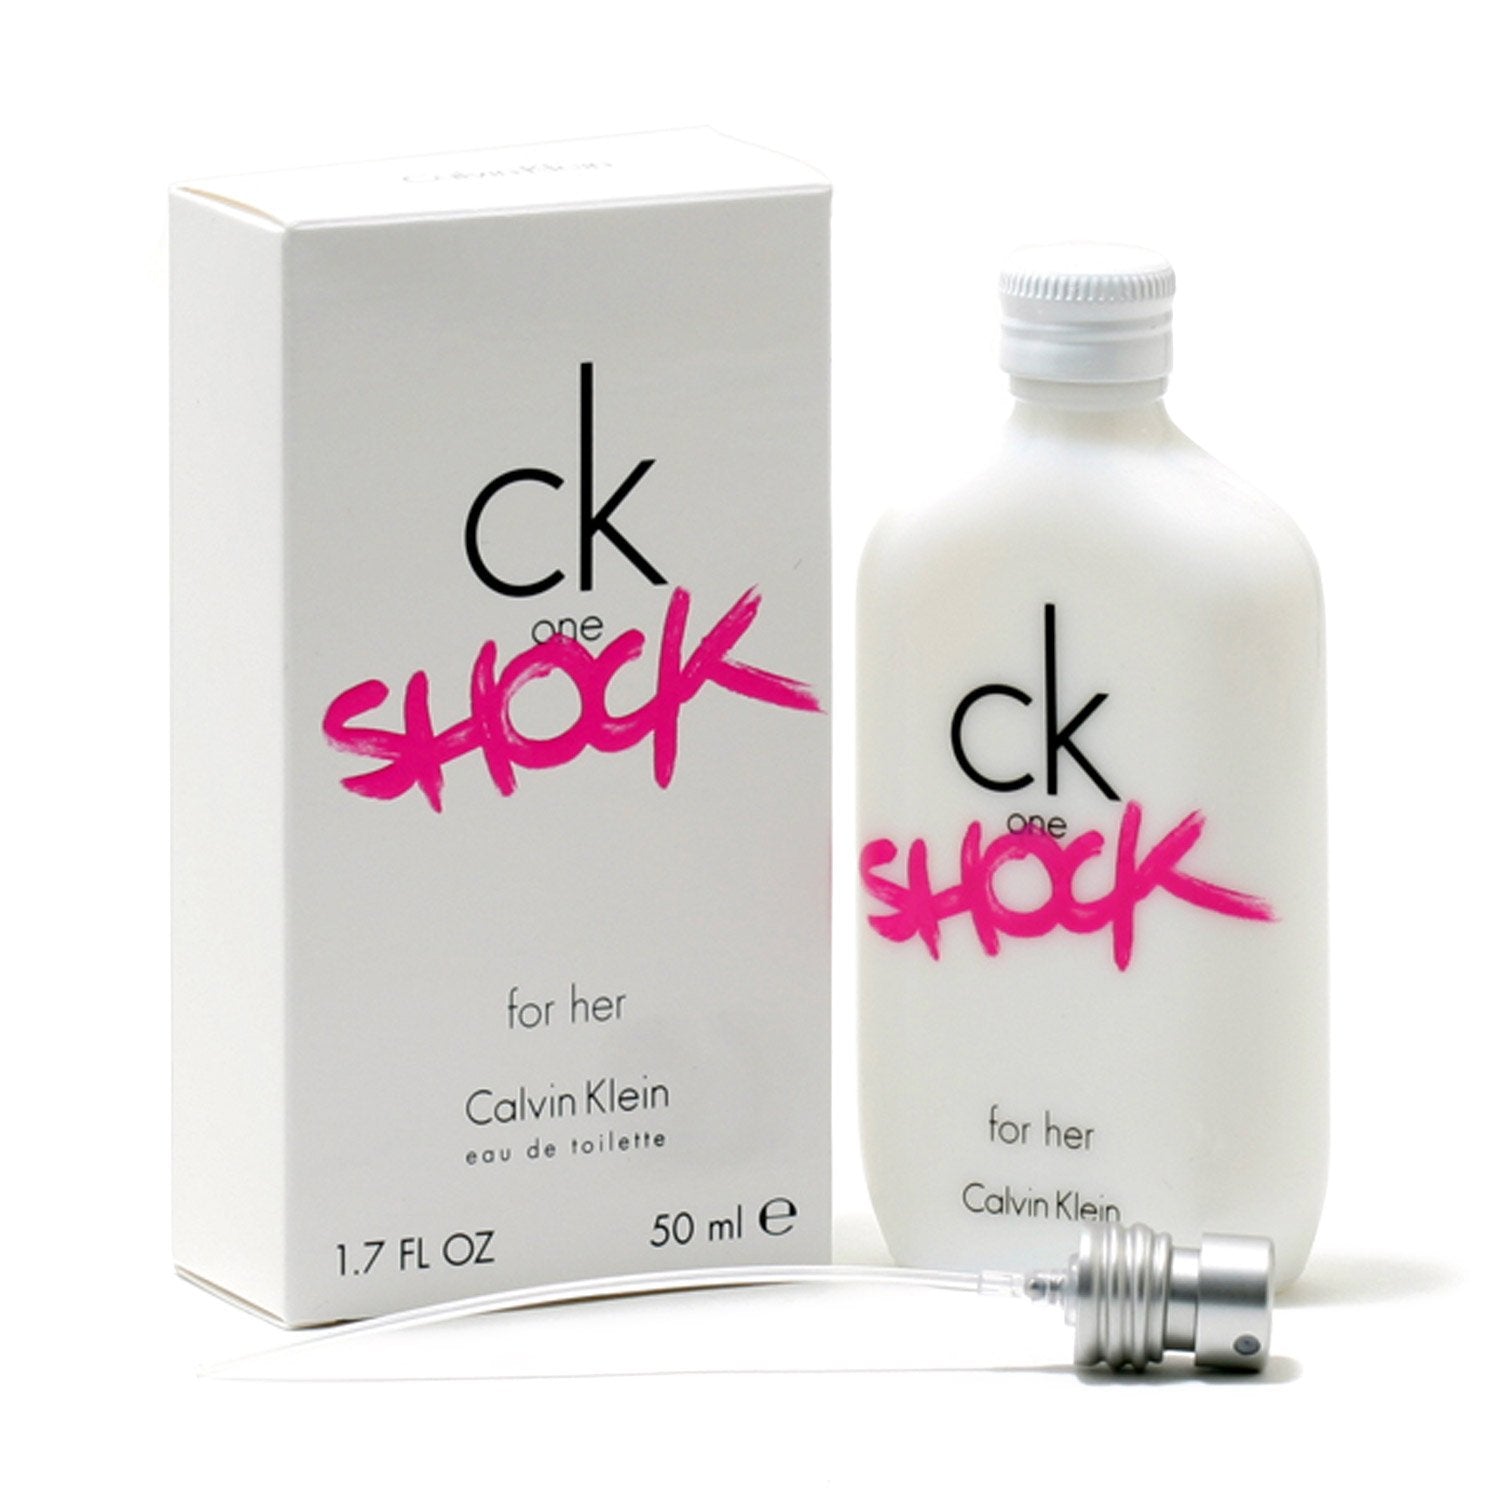 Perfume - CK ONE SHOCK FOR WOMEN BY CALVIN KLEIN - EAU DE TOILETTE SPRAY